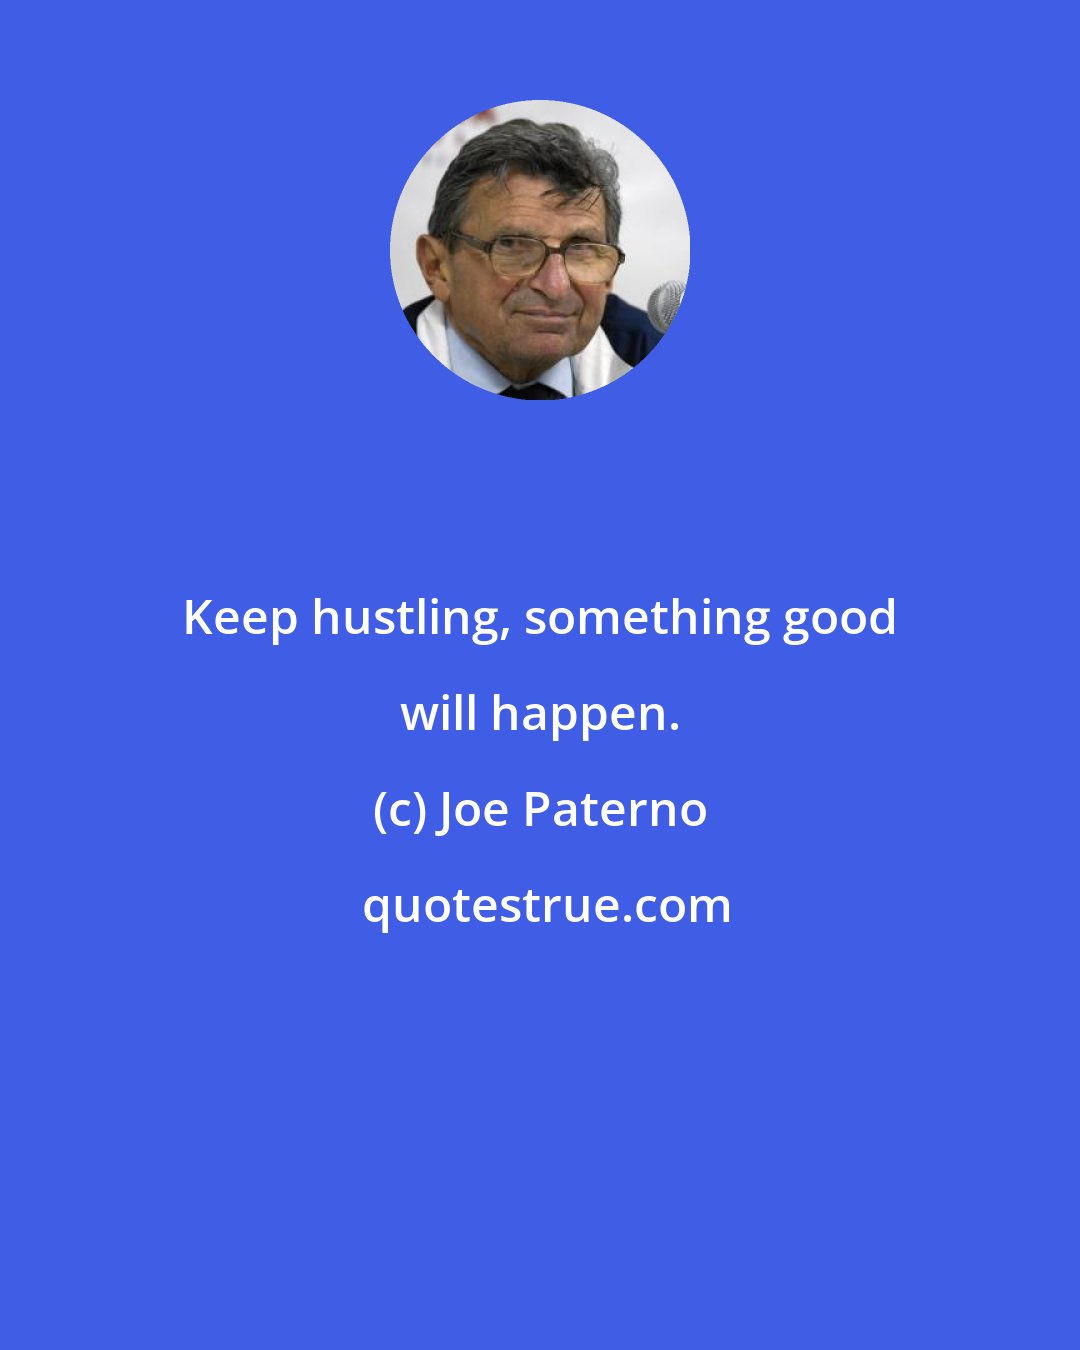 Joe Paterno: Keep hustling, something good will happen.